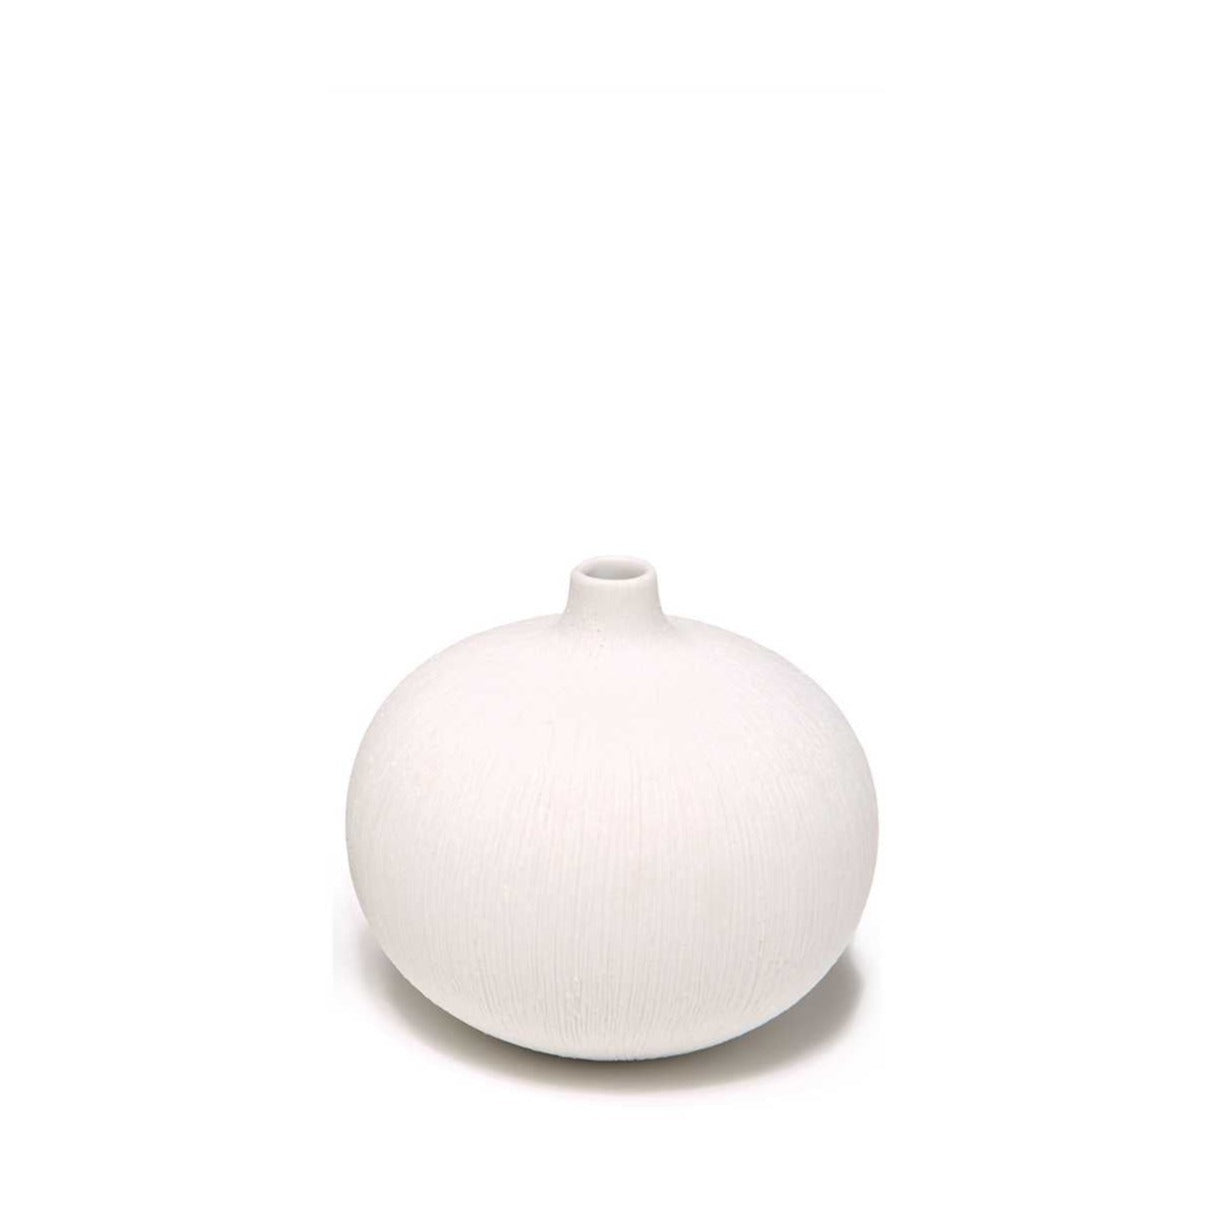 Lindform Bari Small Vase White